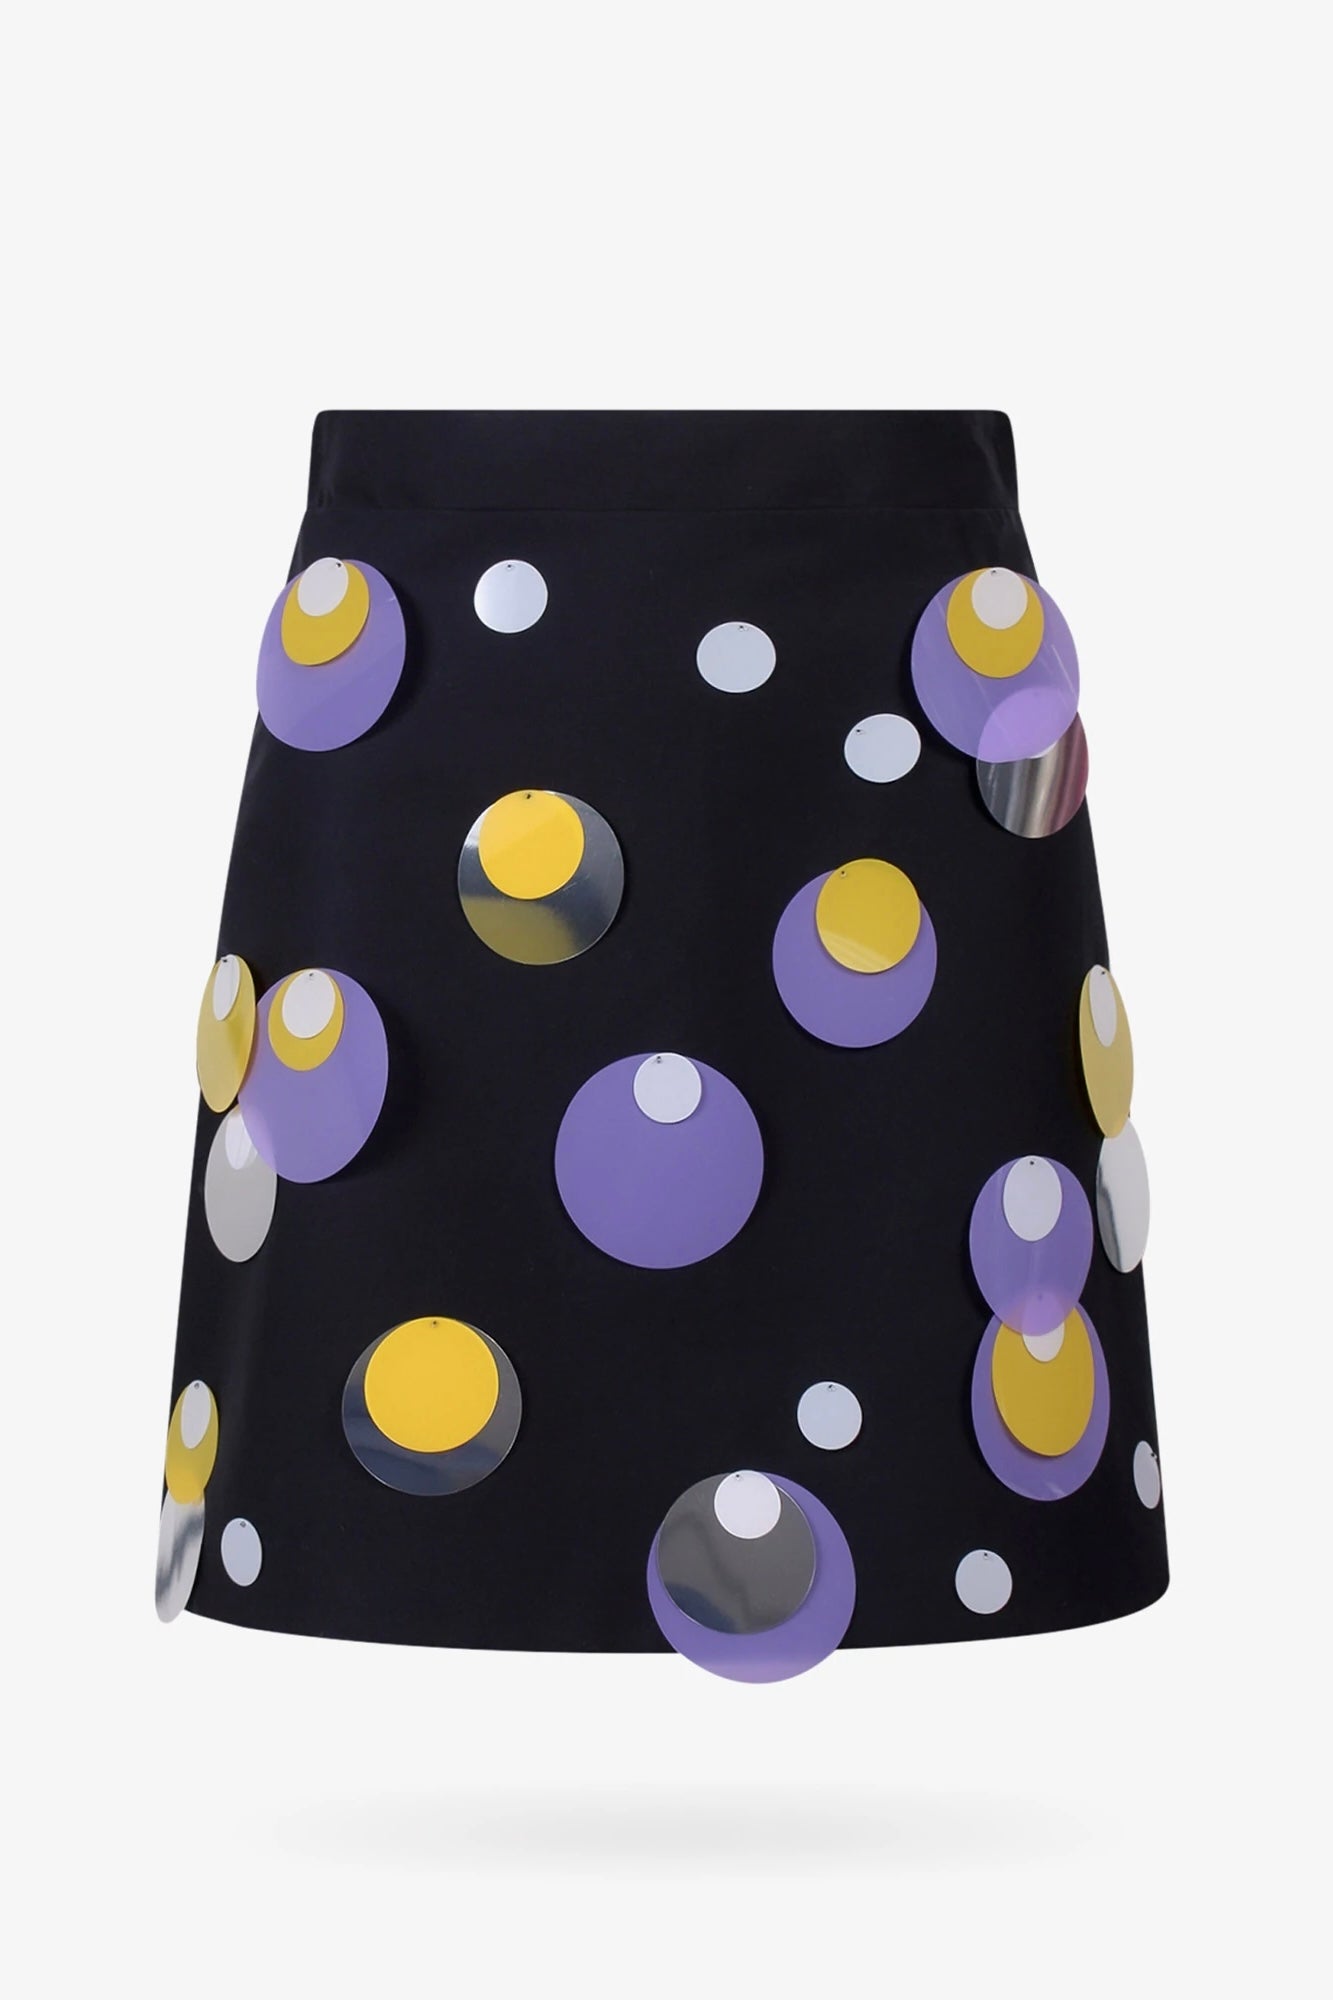 Vivetta- Large-Scale Payette Mini Skirt: Black